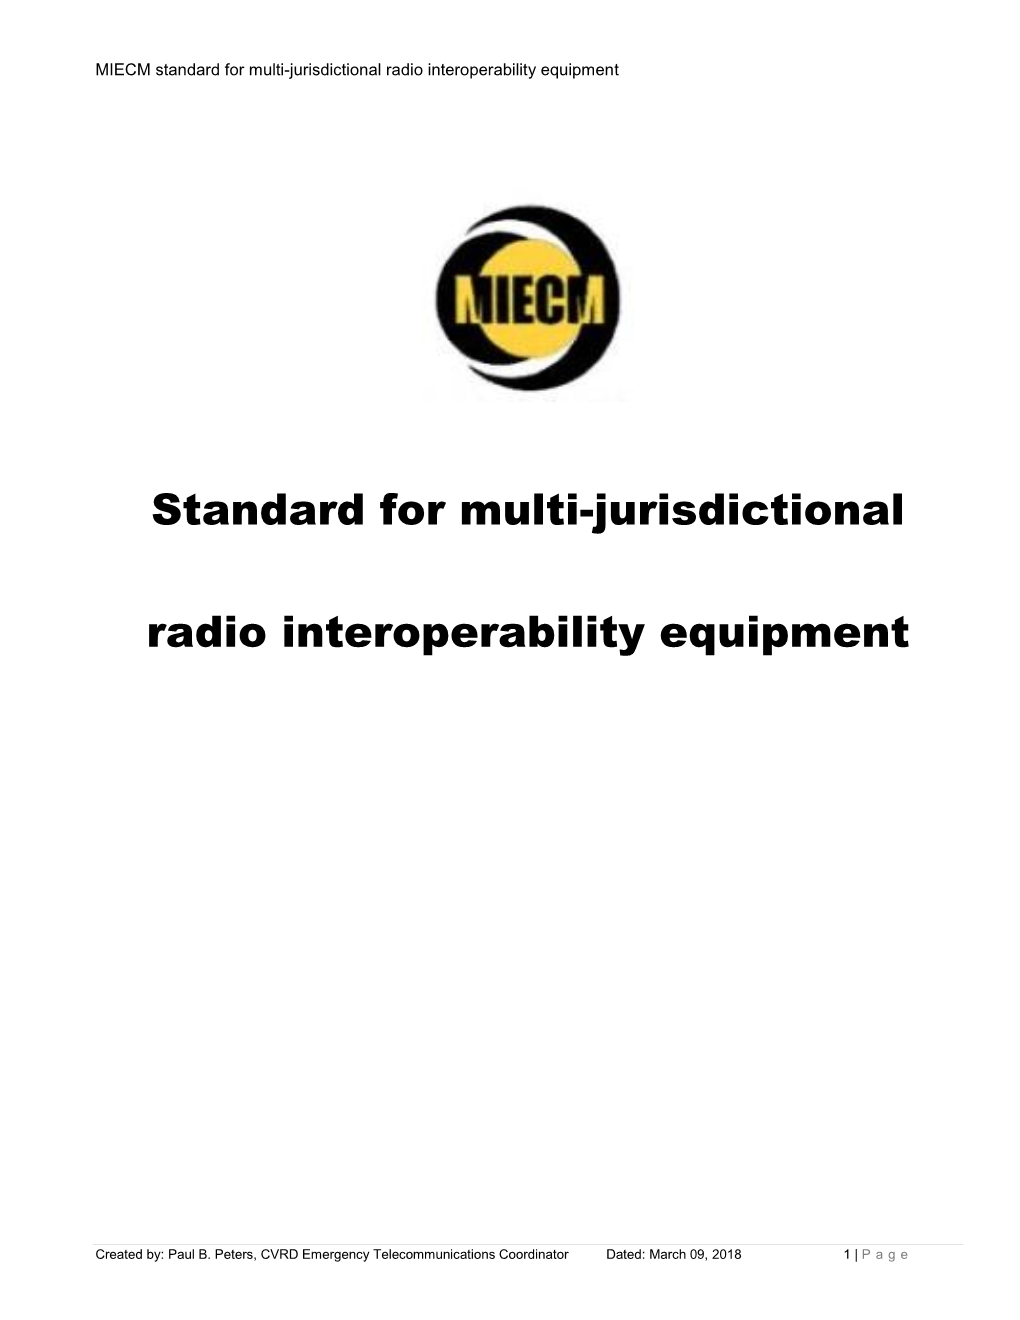 Standard for Multi-Jurisdictional Radio Interoperability Equipment